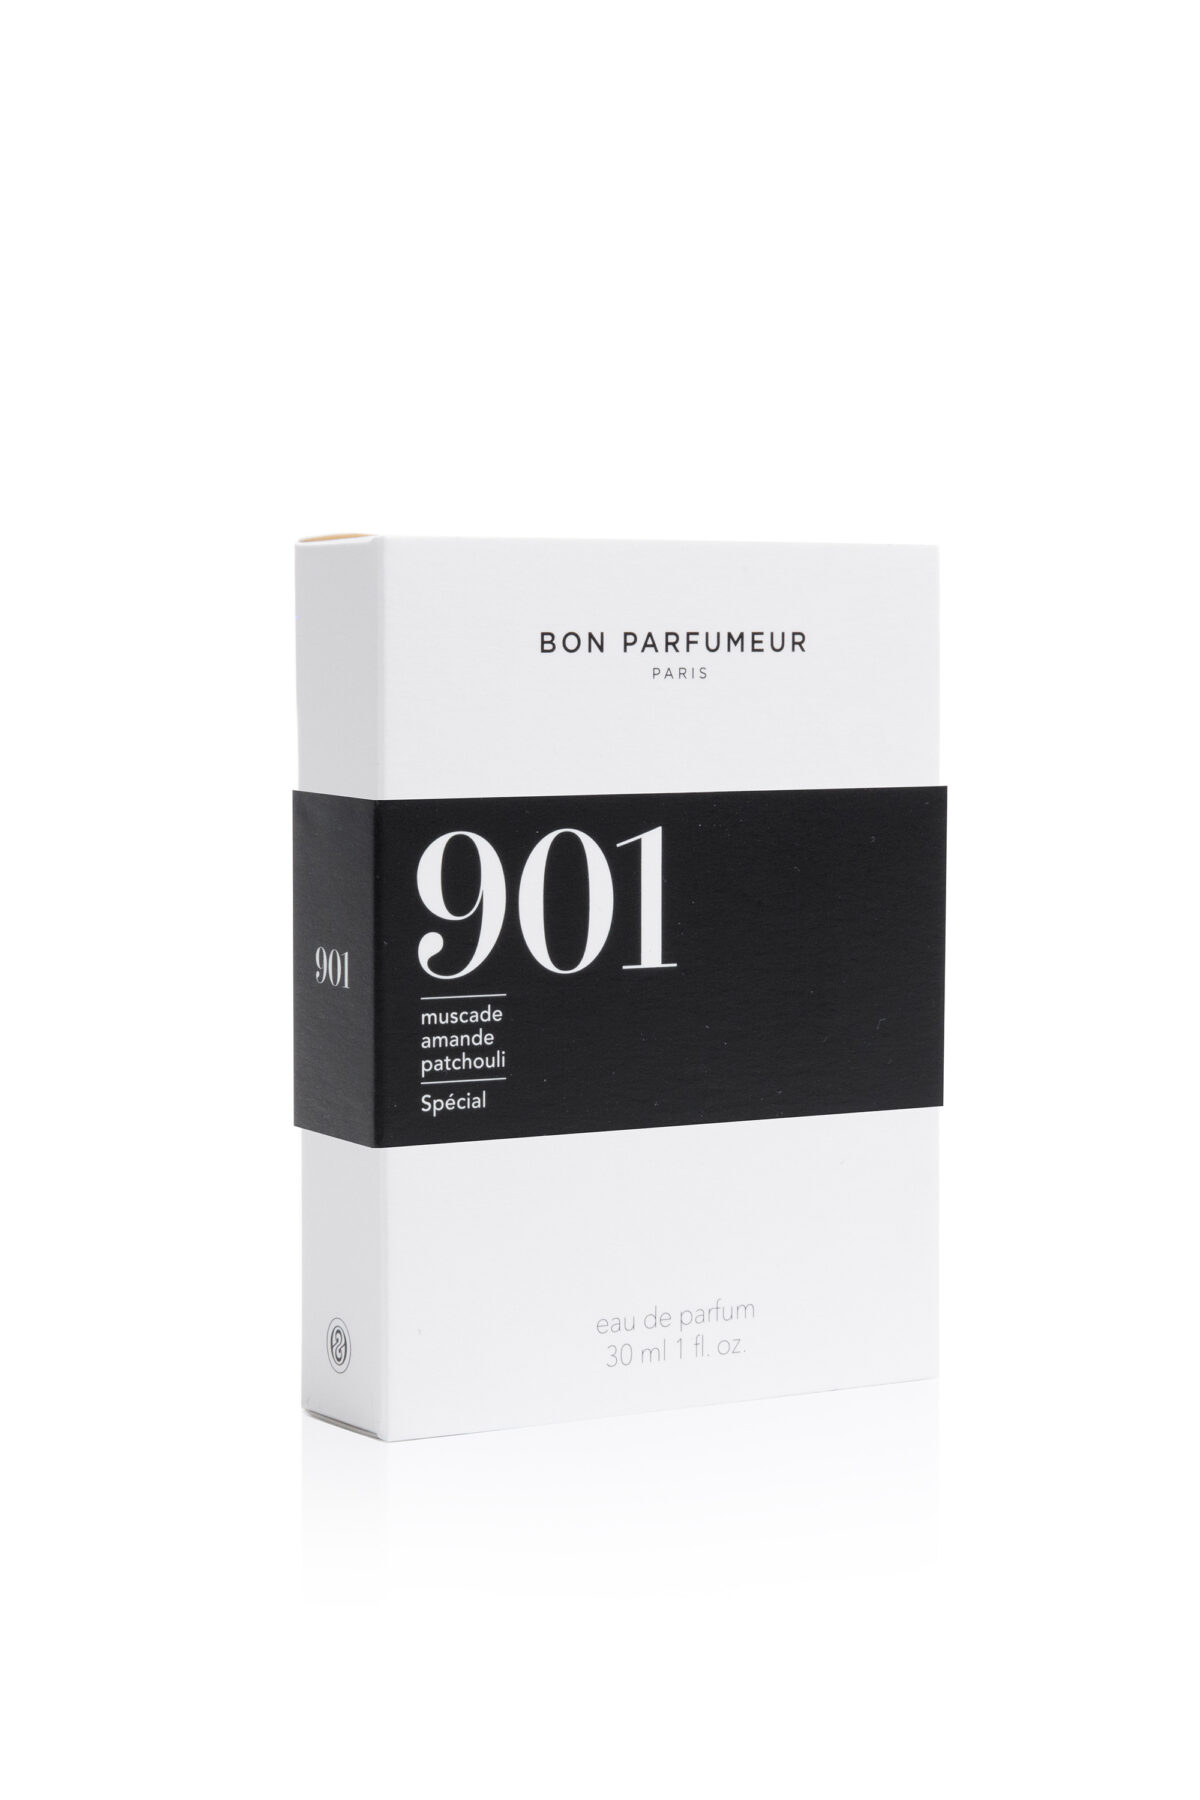 bon-parfumeur-901-nutmeg-almond-patchouli-matchboxathens